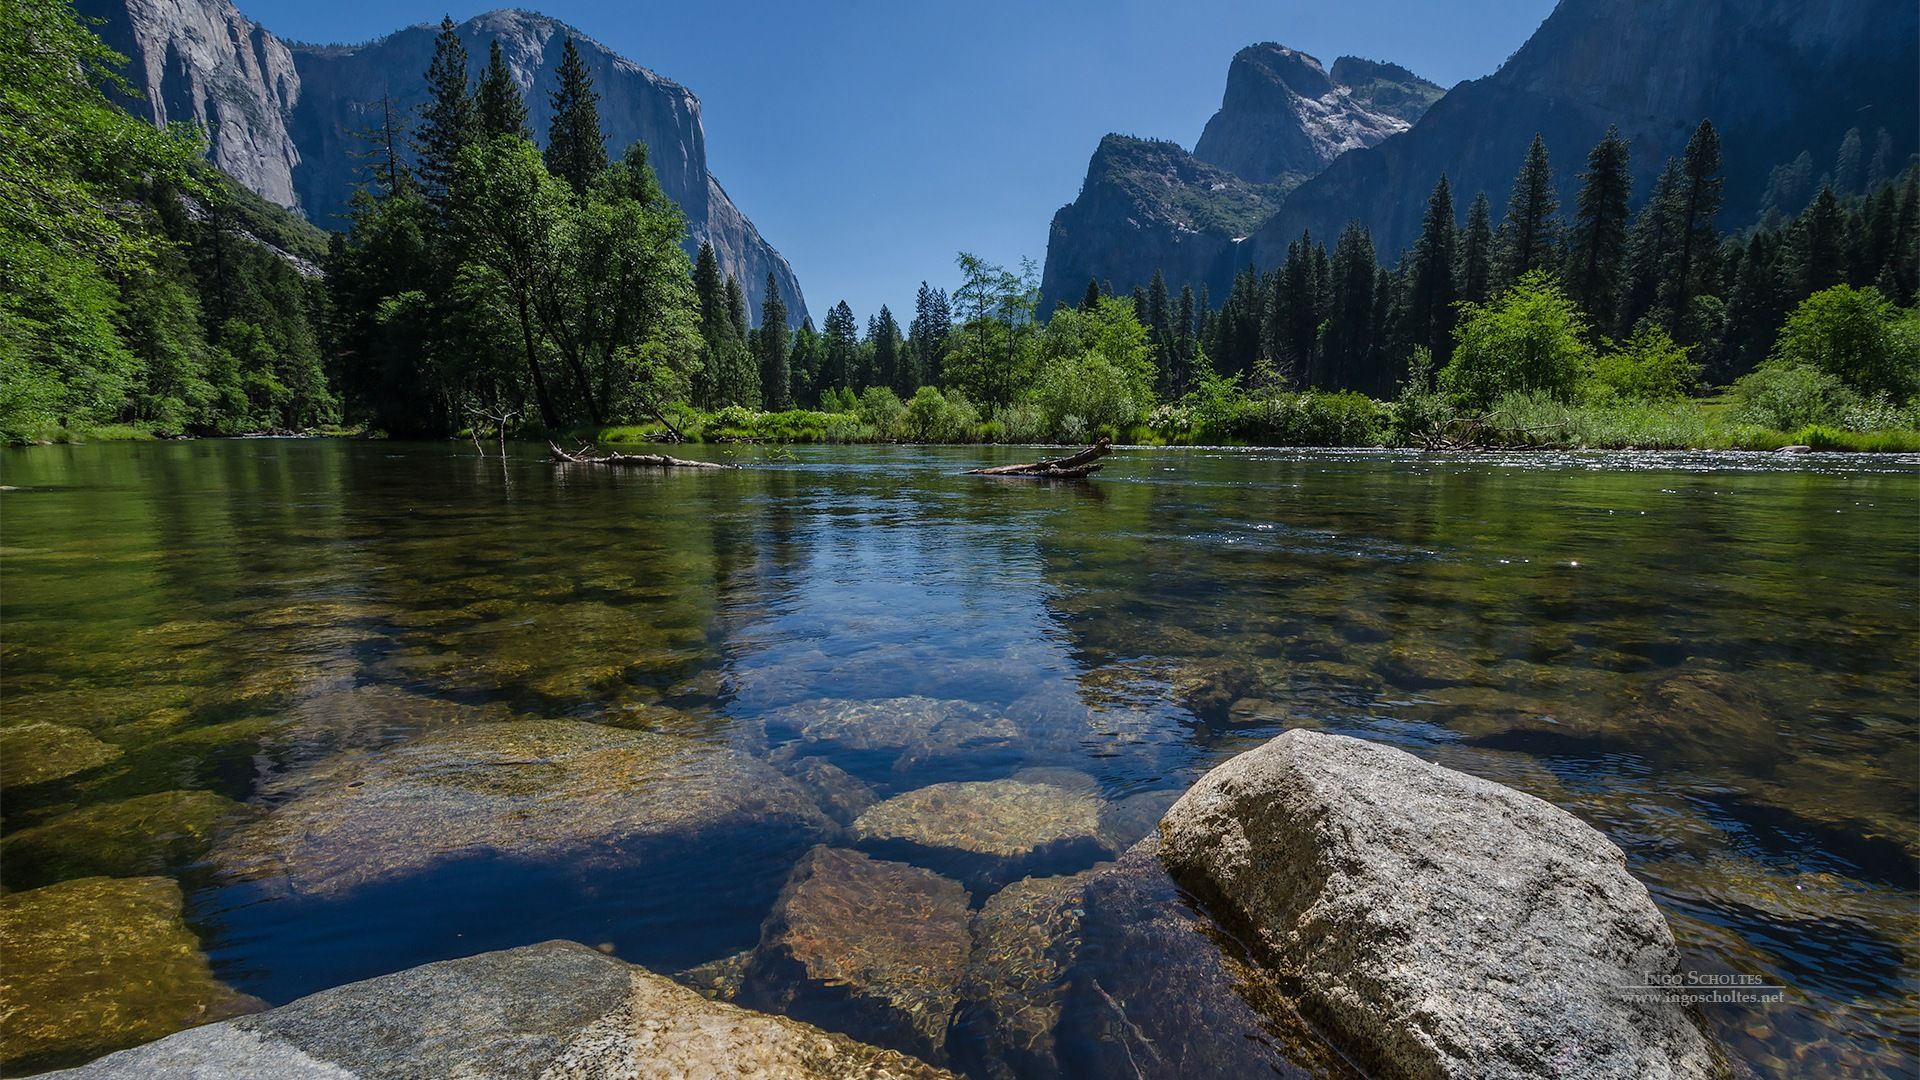 Windows 8 theme, Yosemite National Park HD wallpaper Wallpaper Download 8 theme, Yosemite Nat. Yosemite, Yosemite valley, National parks